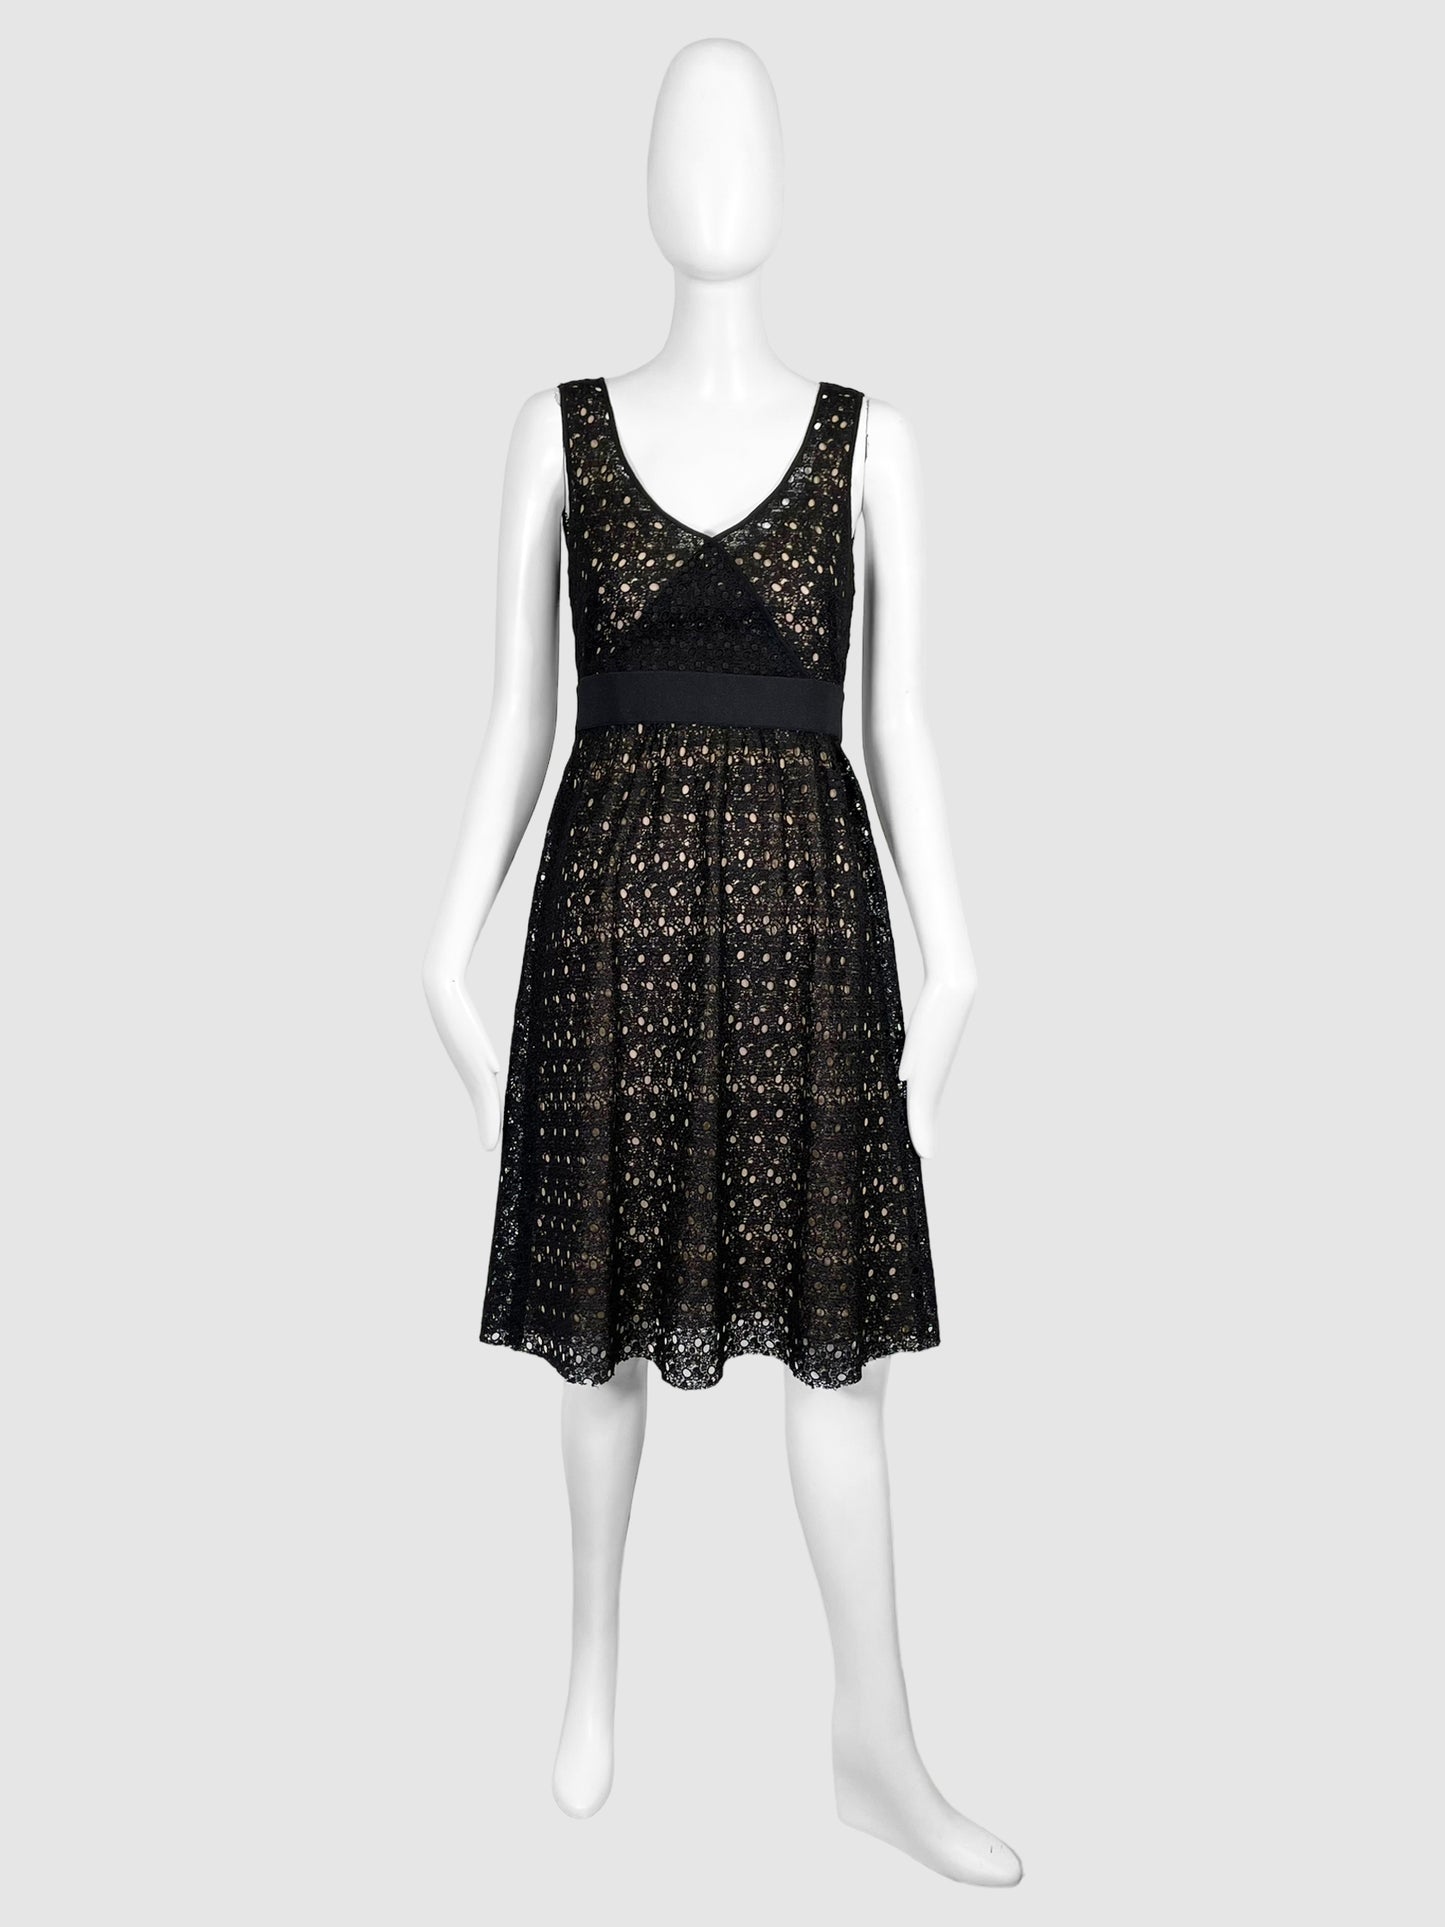 Akris Sleeveless Crochet Dress - Size 4